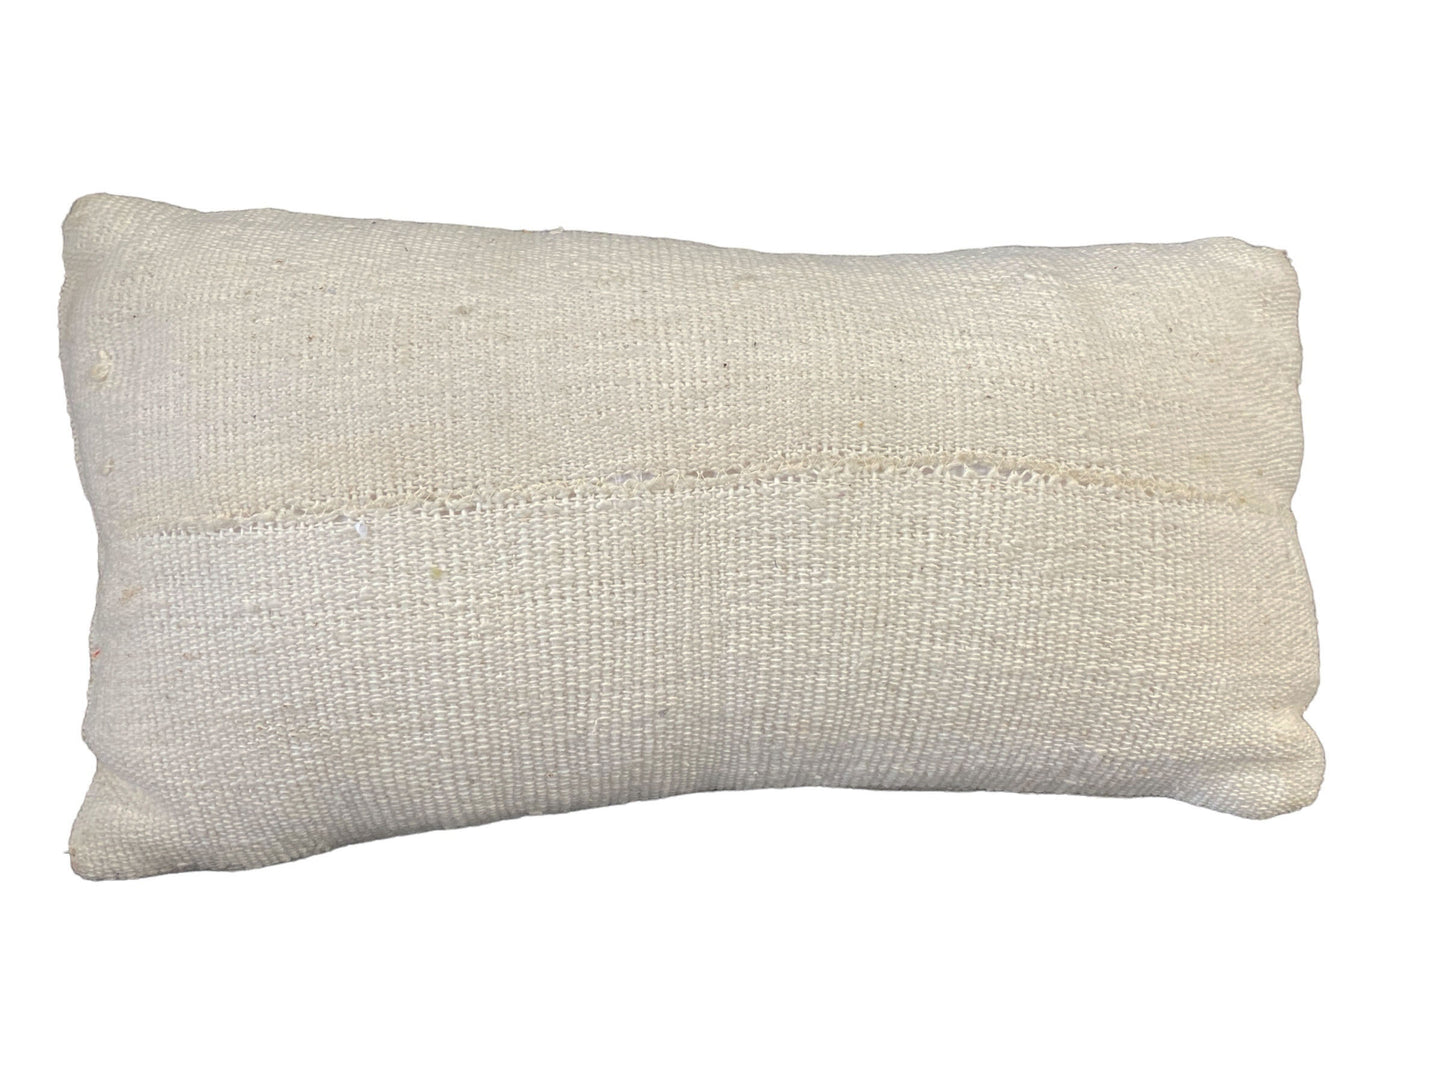 #7131  Black & White  Lumbar Pillow  W/Korhogo Textile African 16"W